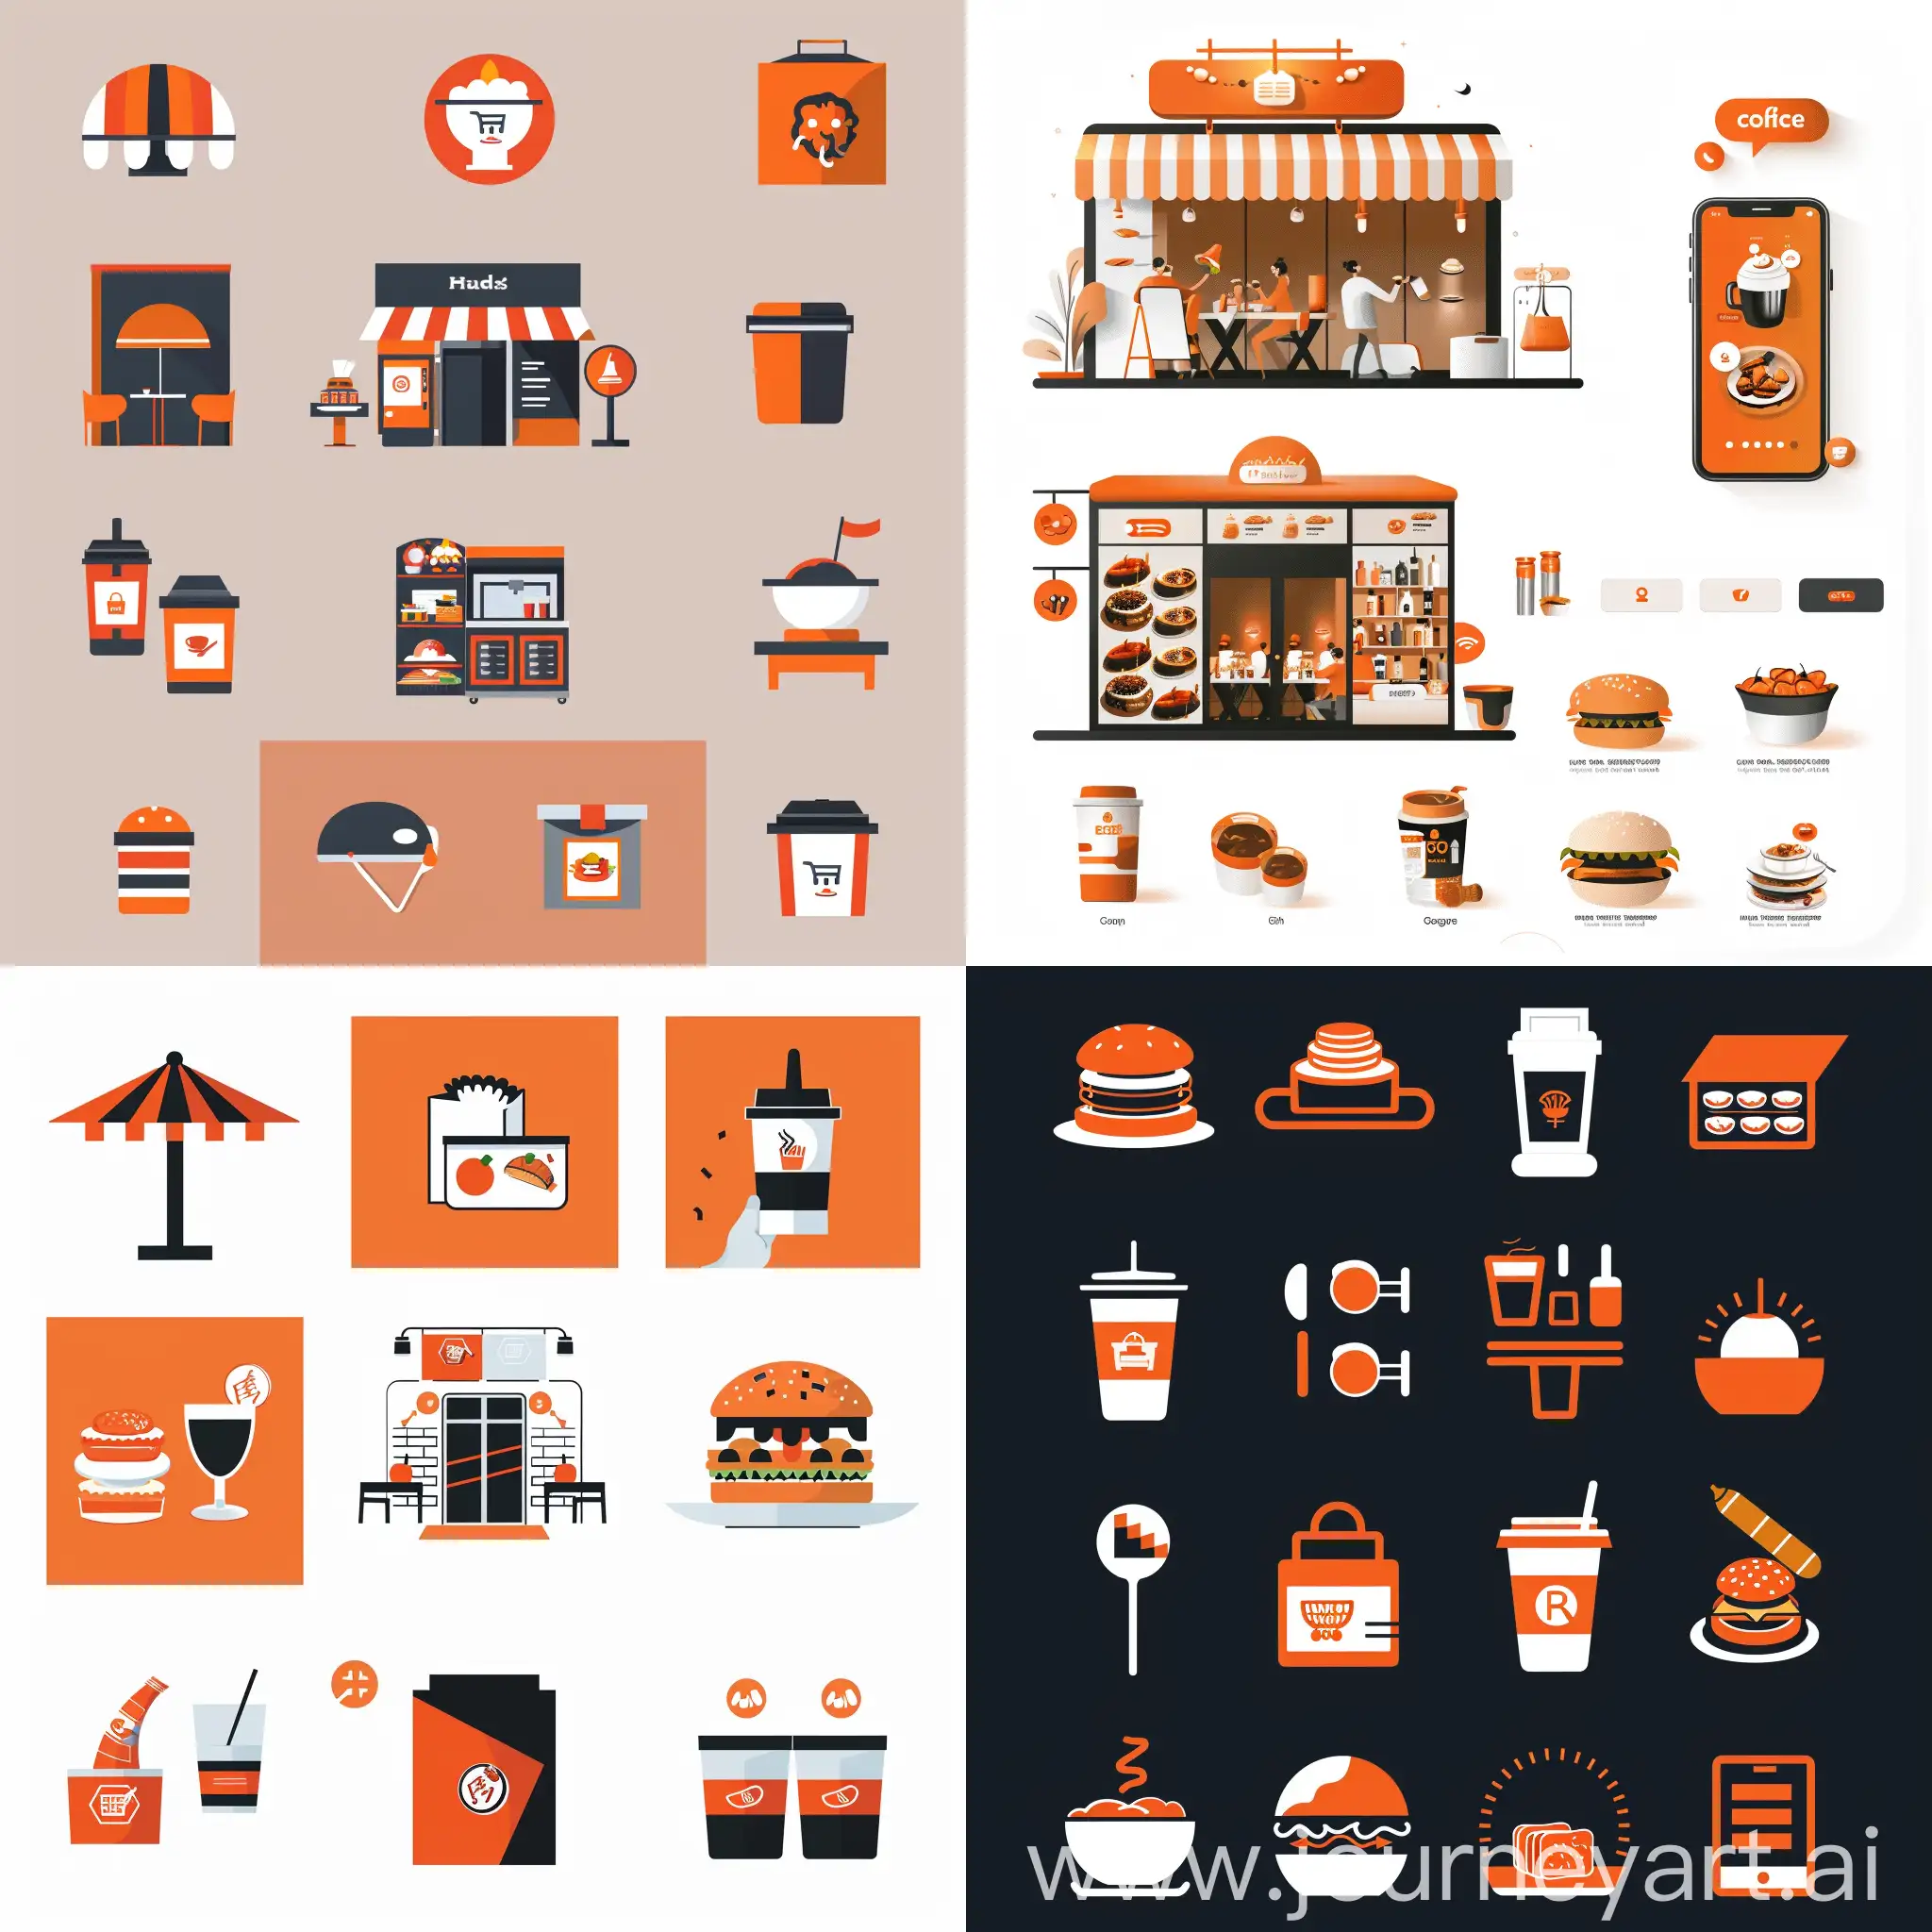 a modern restaurant, online group buying, ordering food, bright orange color scheme, a set of icons, clean and simple design, high resolution, digital illustration, recognizable symbols for easy user navigation